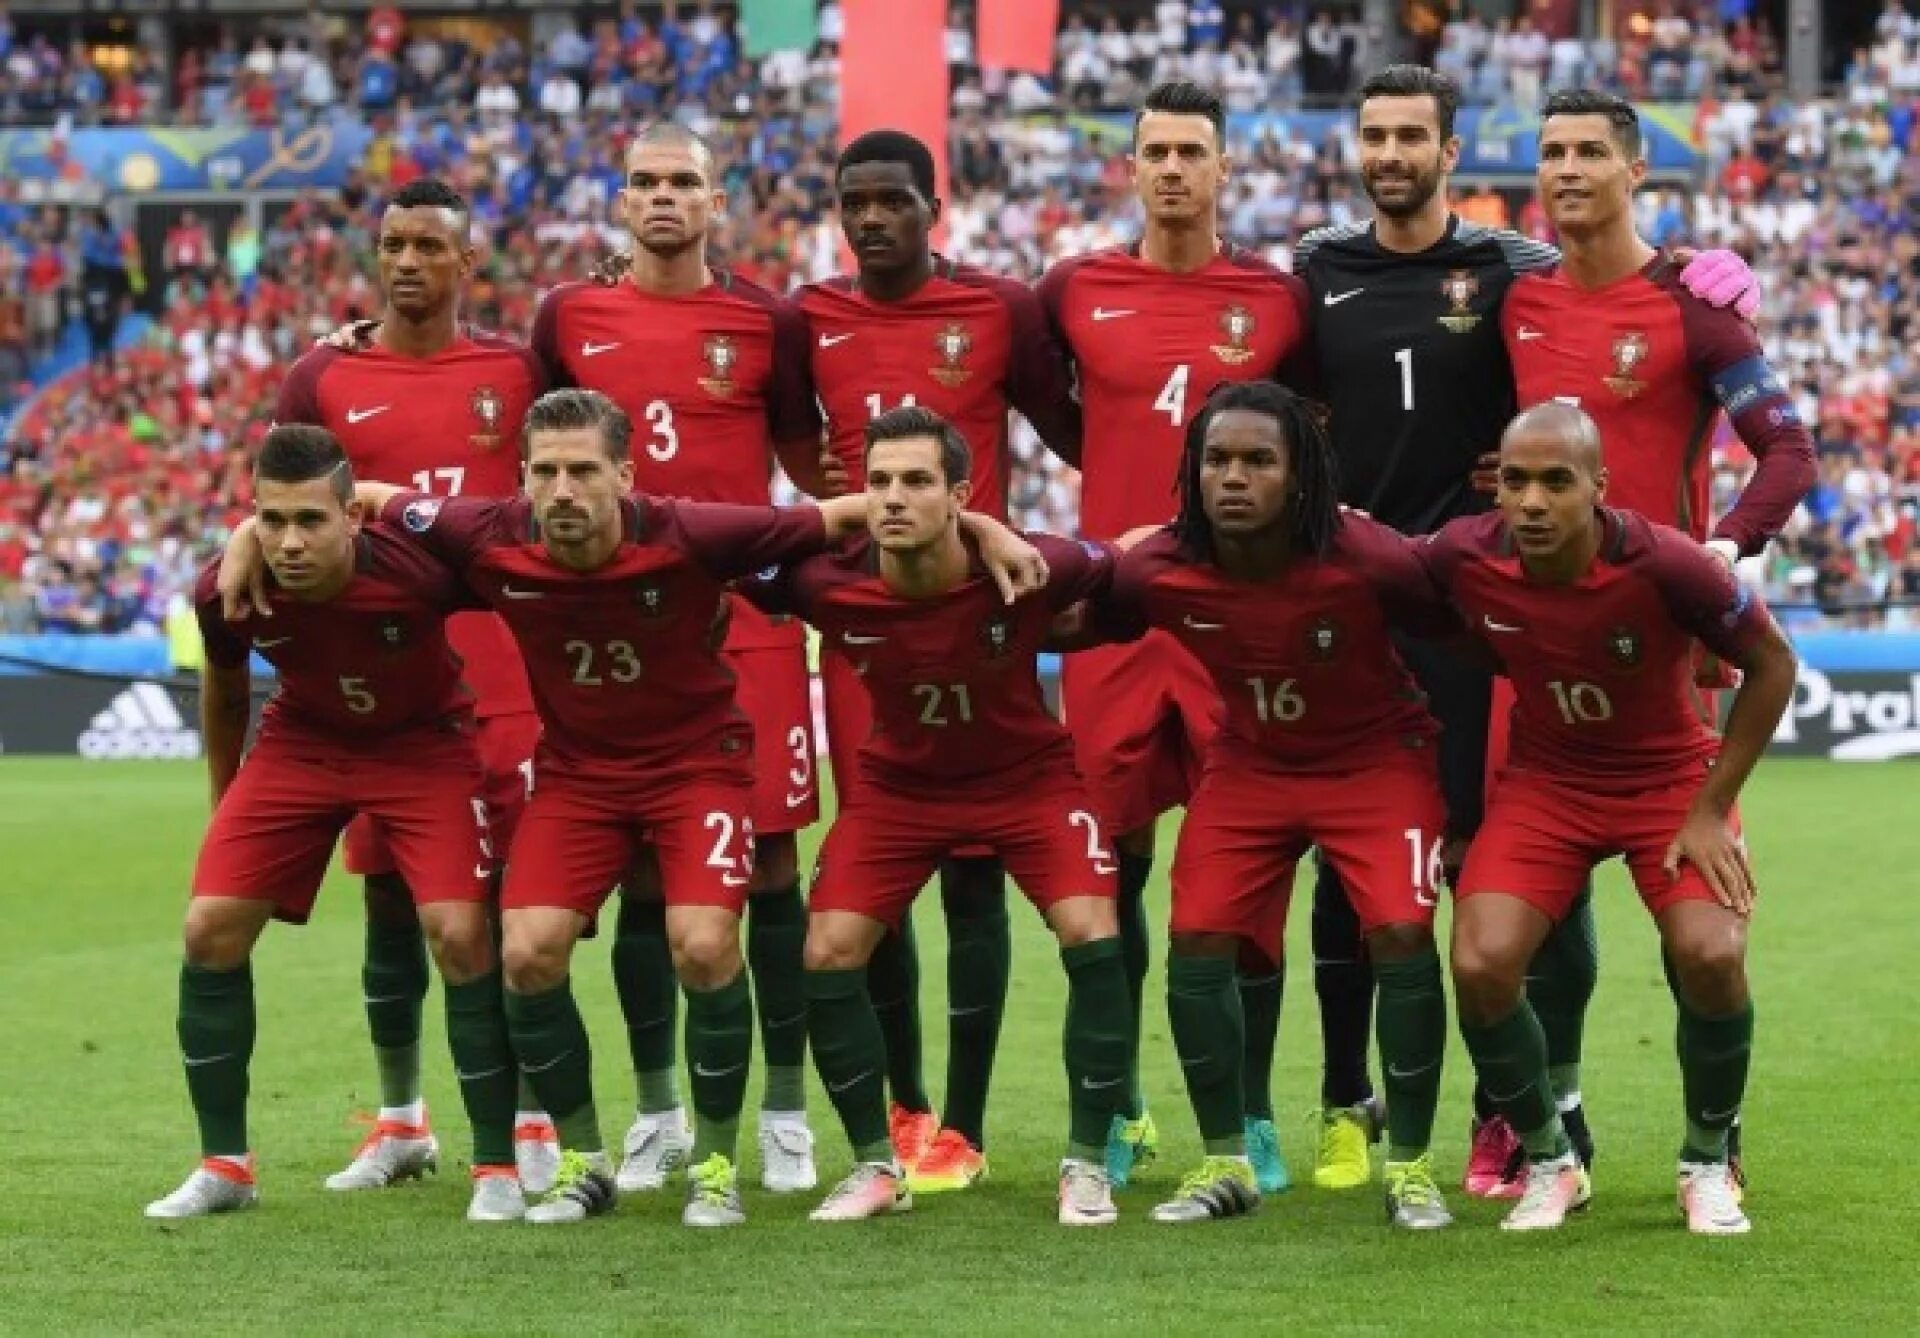 Португалия чемпион Европы 2016. Португалия Франция евро 2016. Футбол Португалия 2016. Чемпионы Европы по футболу 2016.